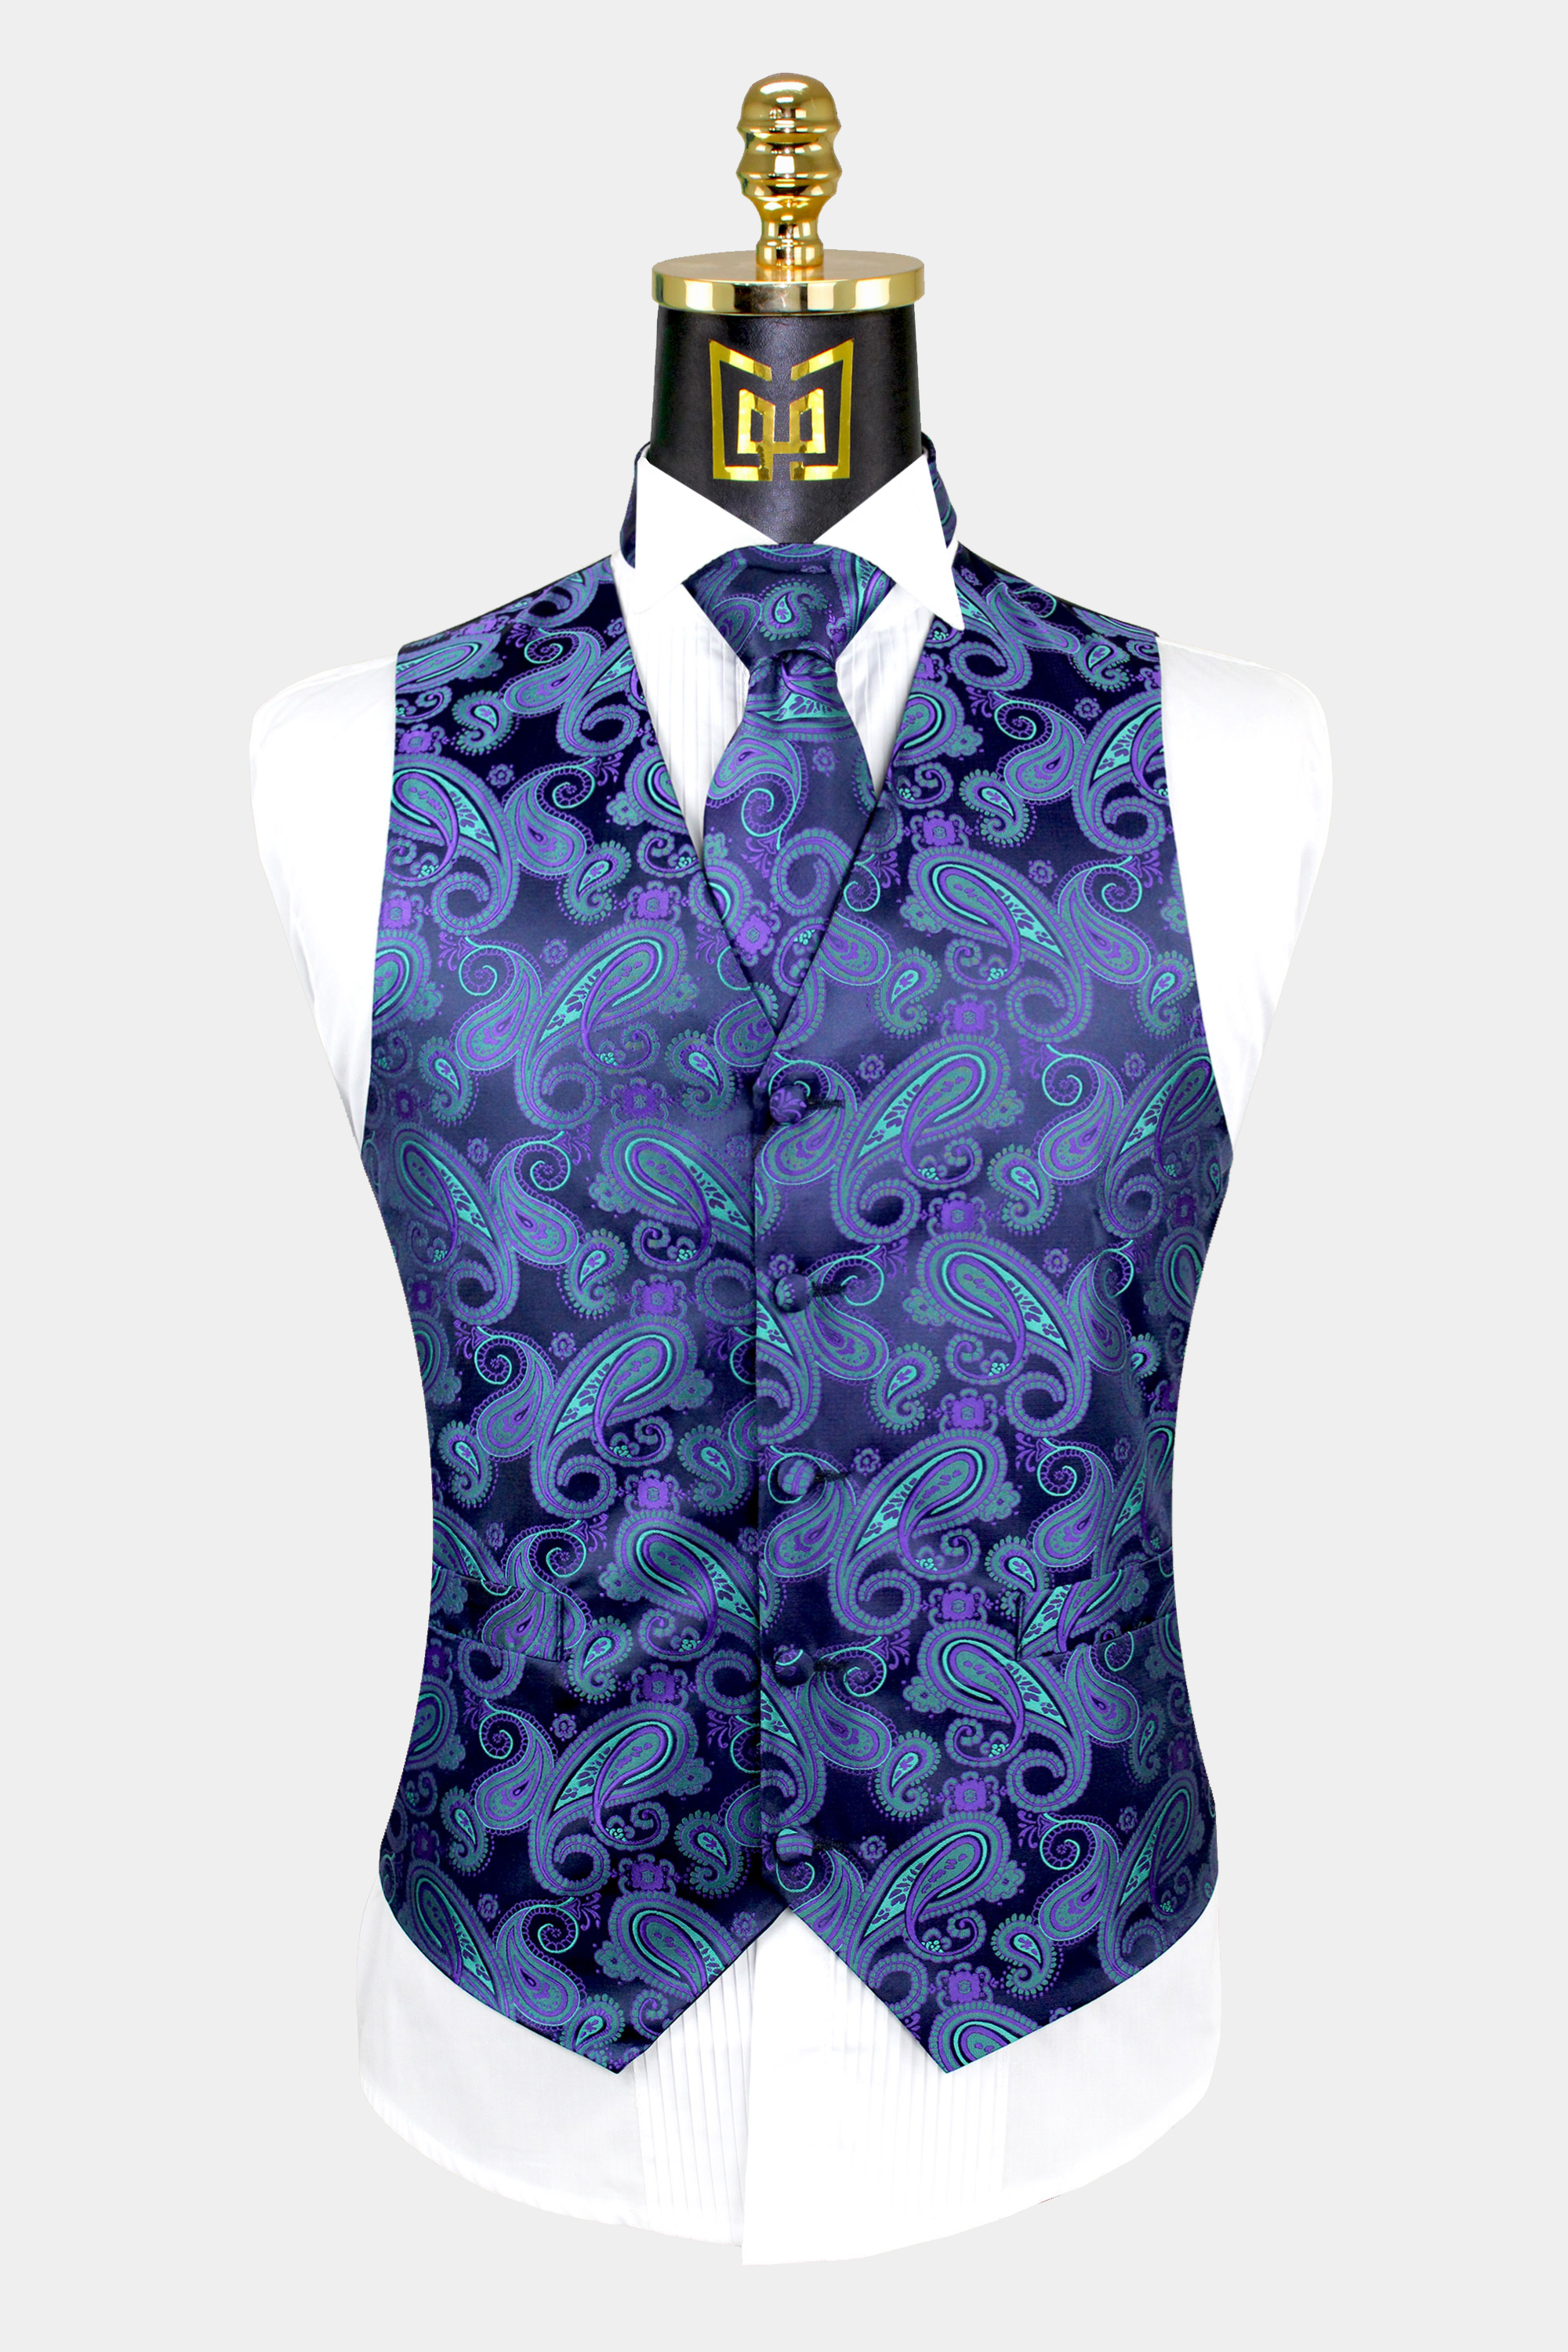 New Men's Formal Vest Tuxedo Waistcoat_2.5" necktie set paisley wedding Silver 